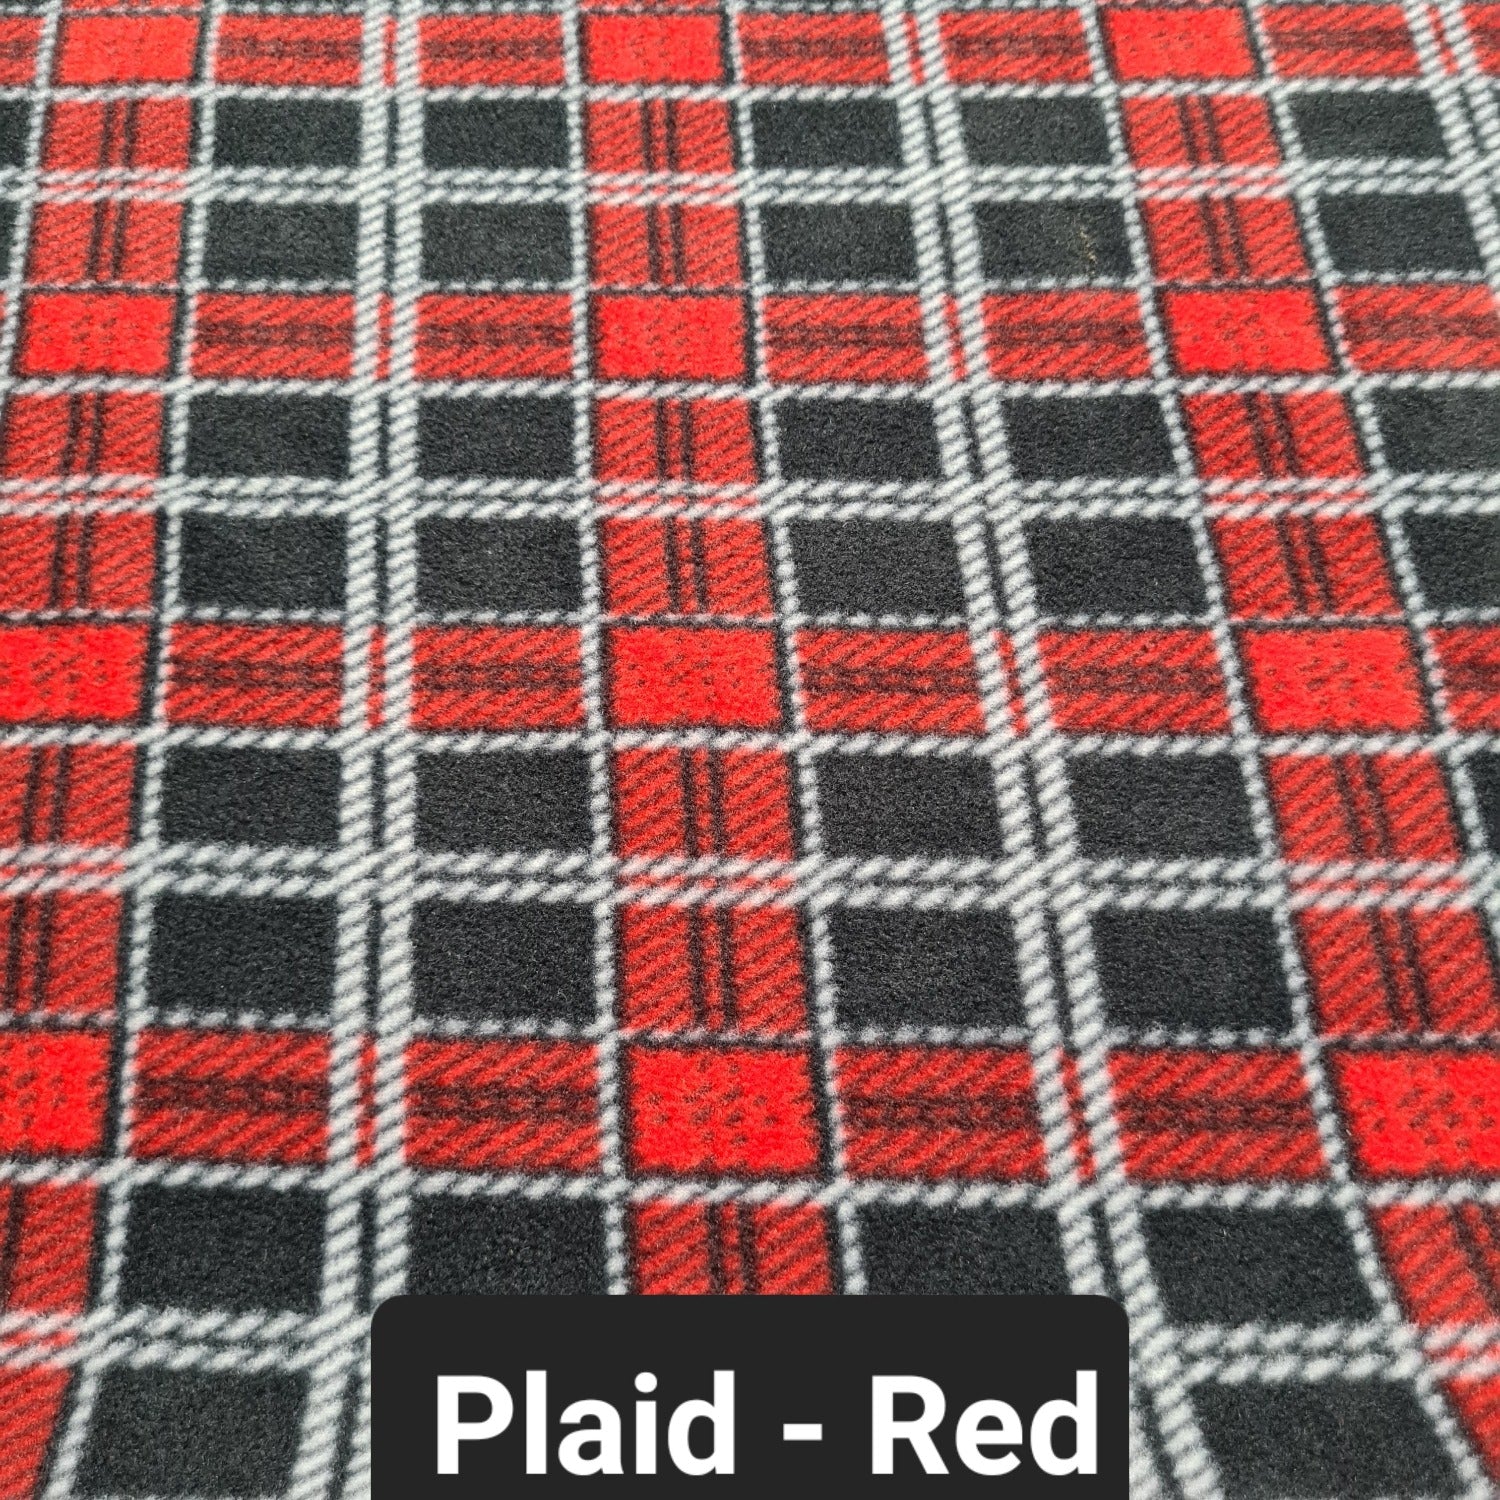 Red and black plaid polar fleece fabric